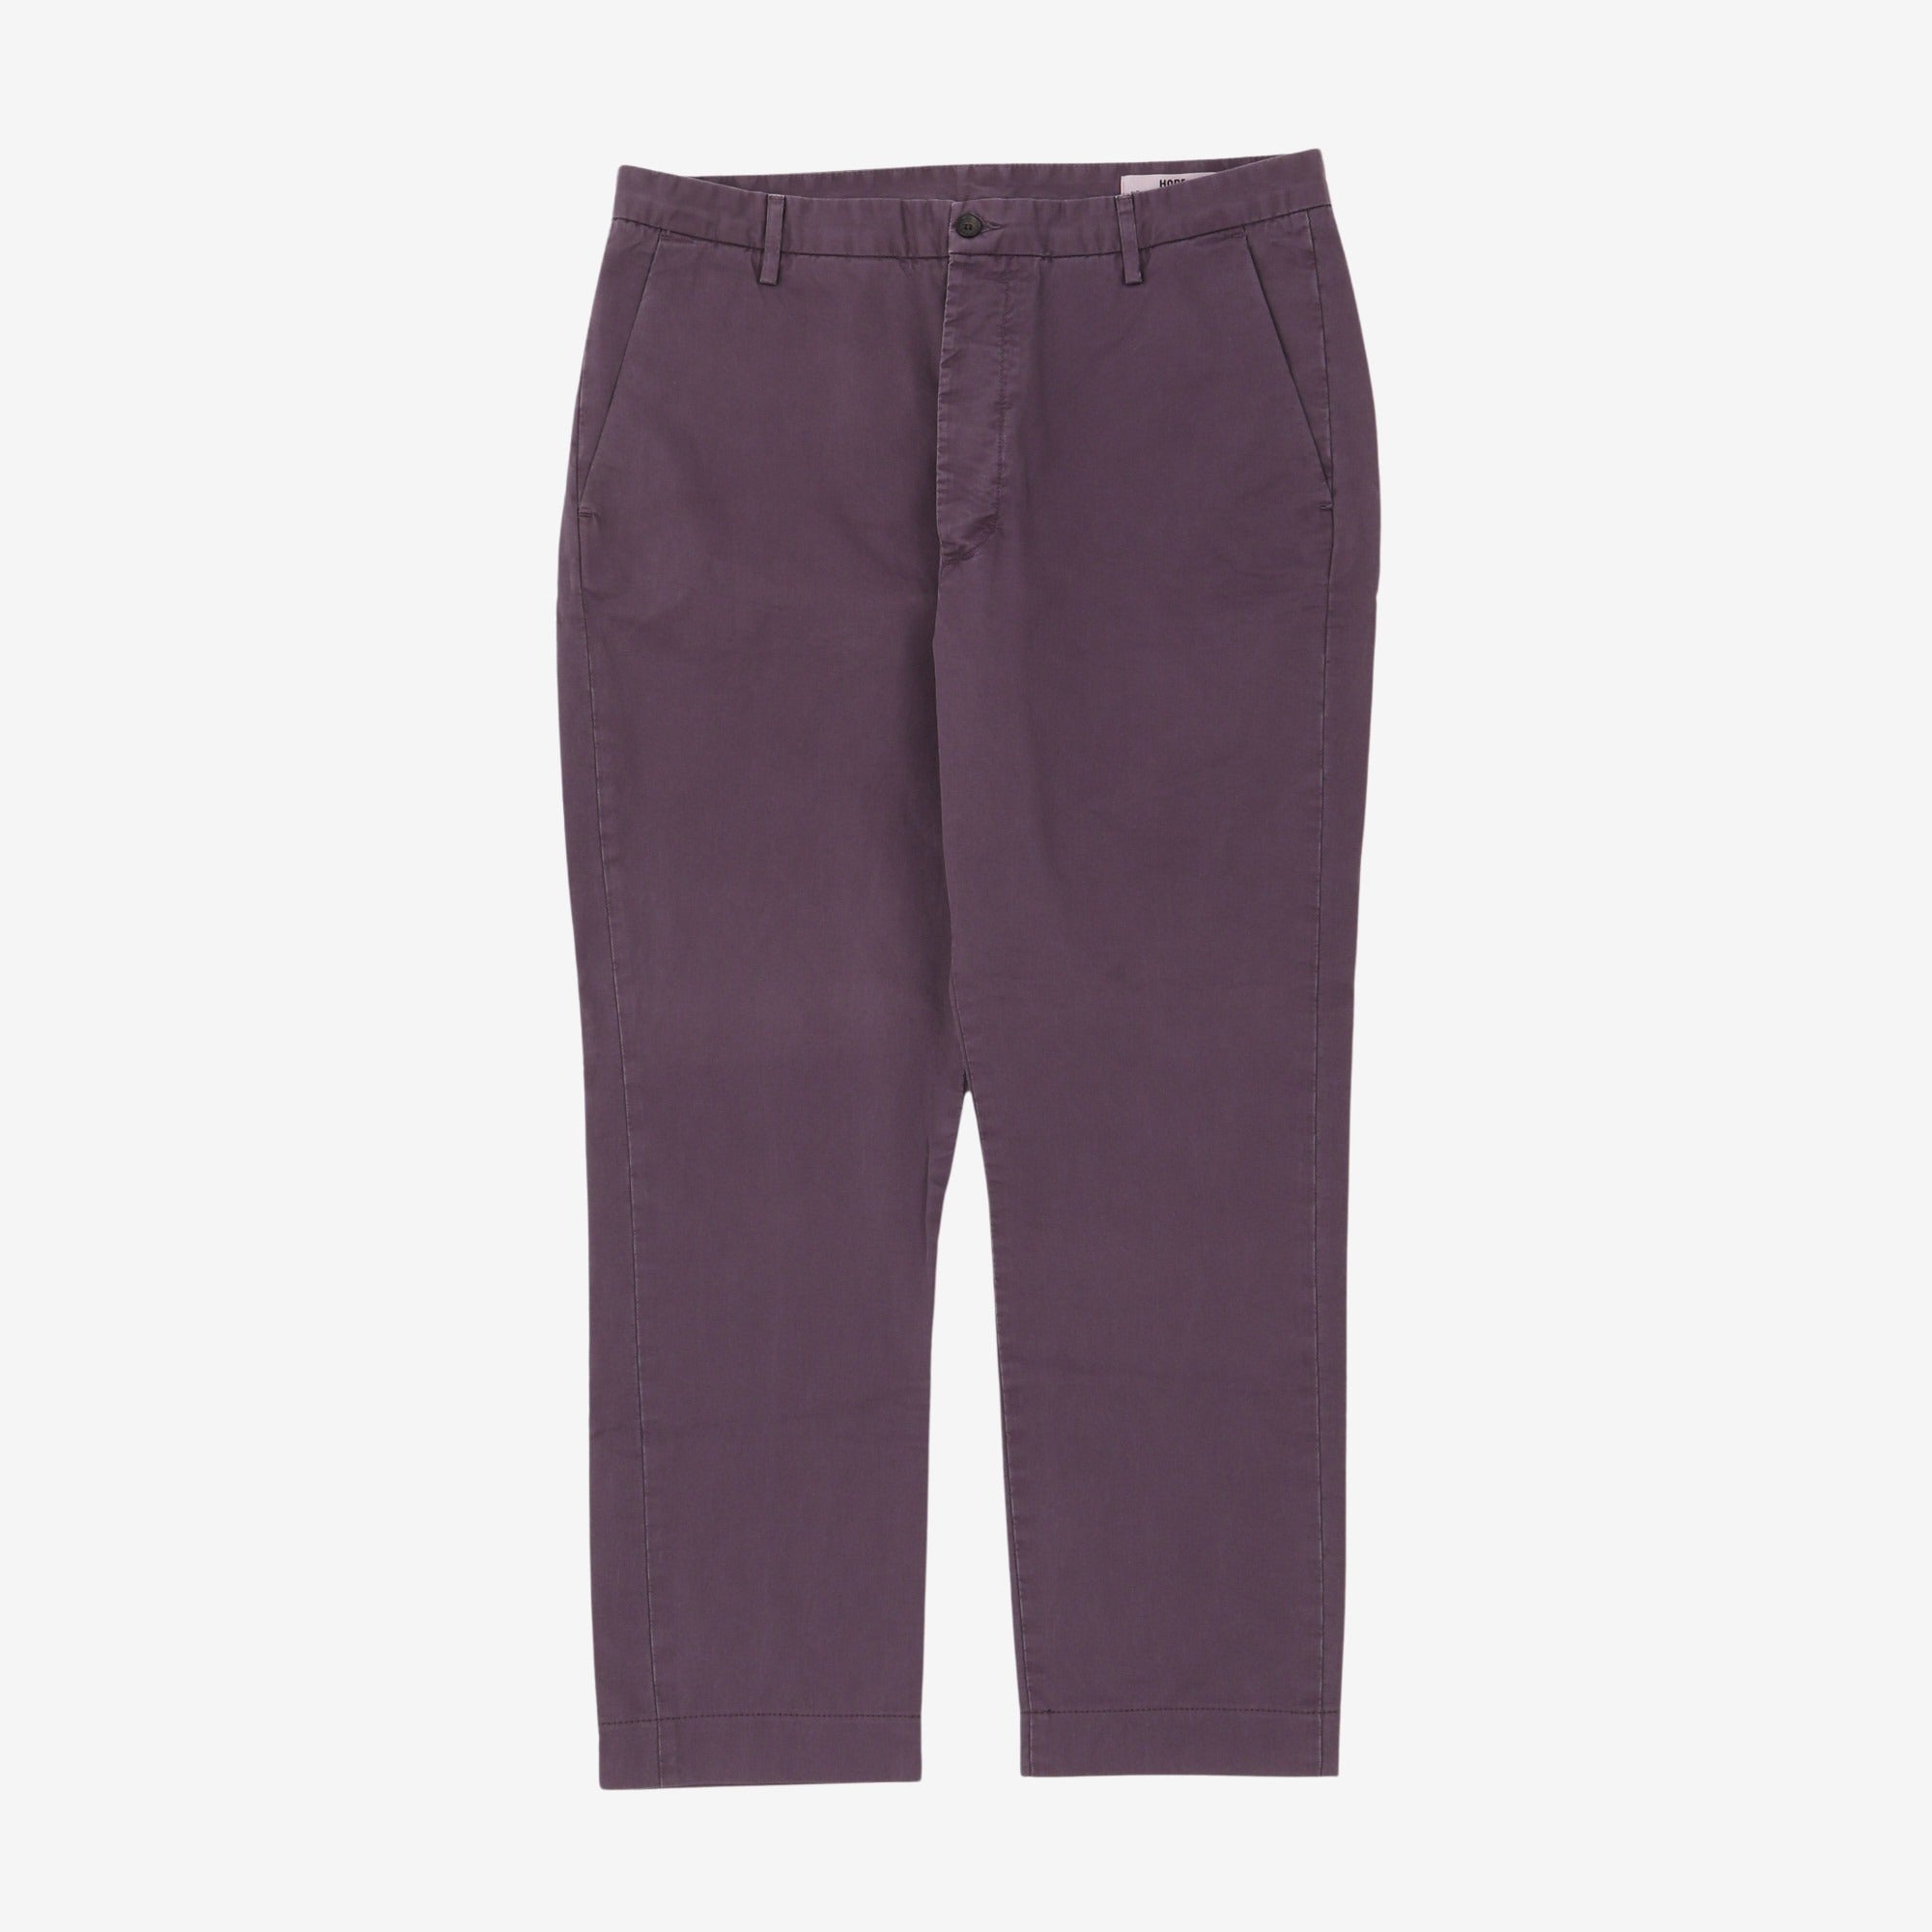 Chino Trousers (35W x 28L)